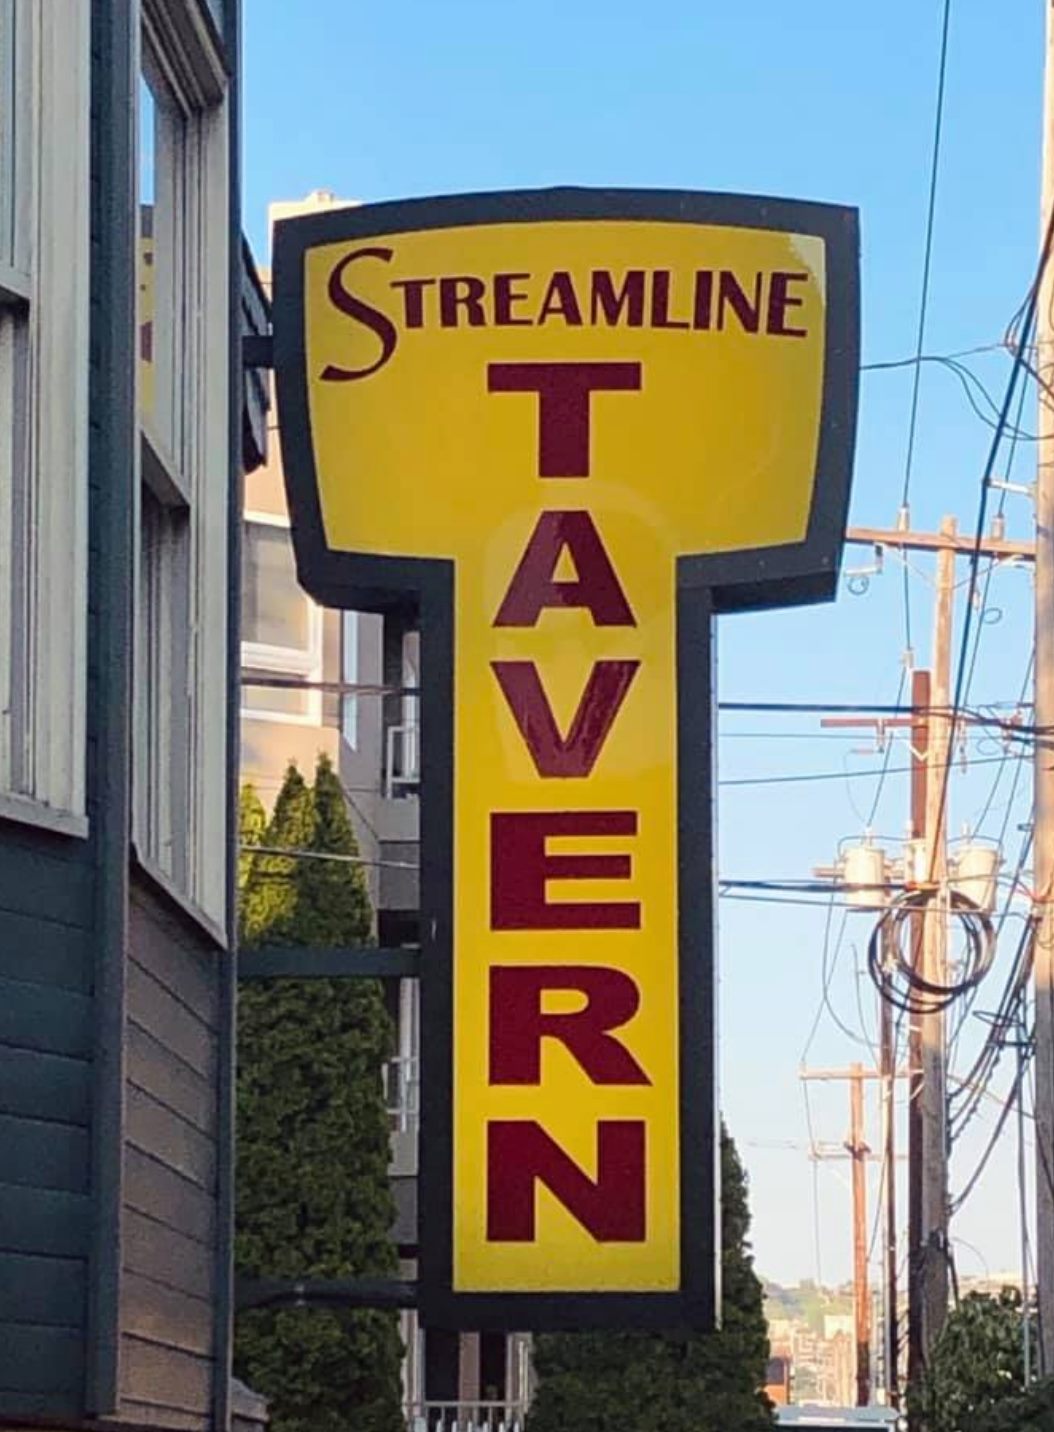 Streamline Tavern